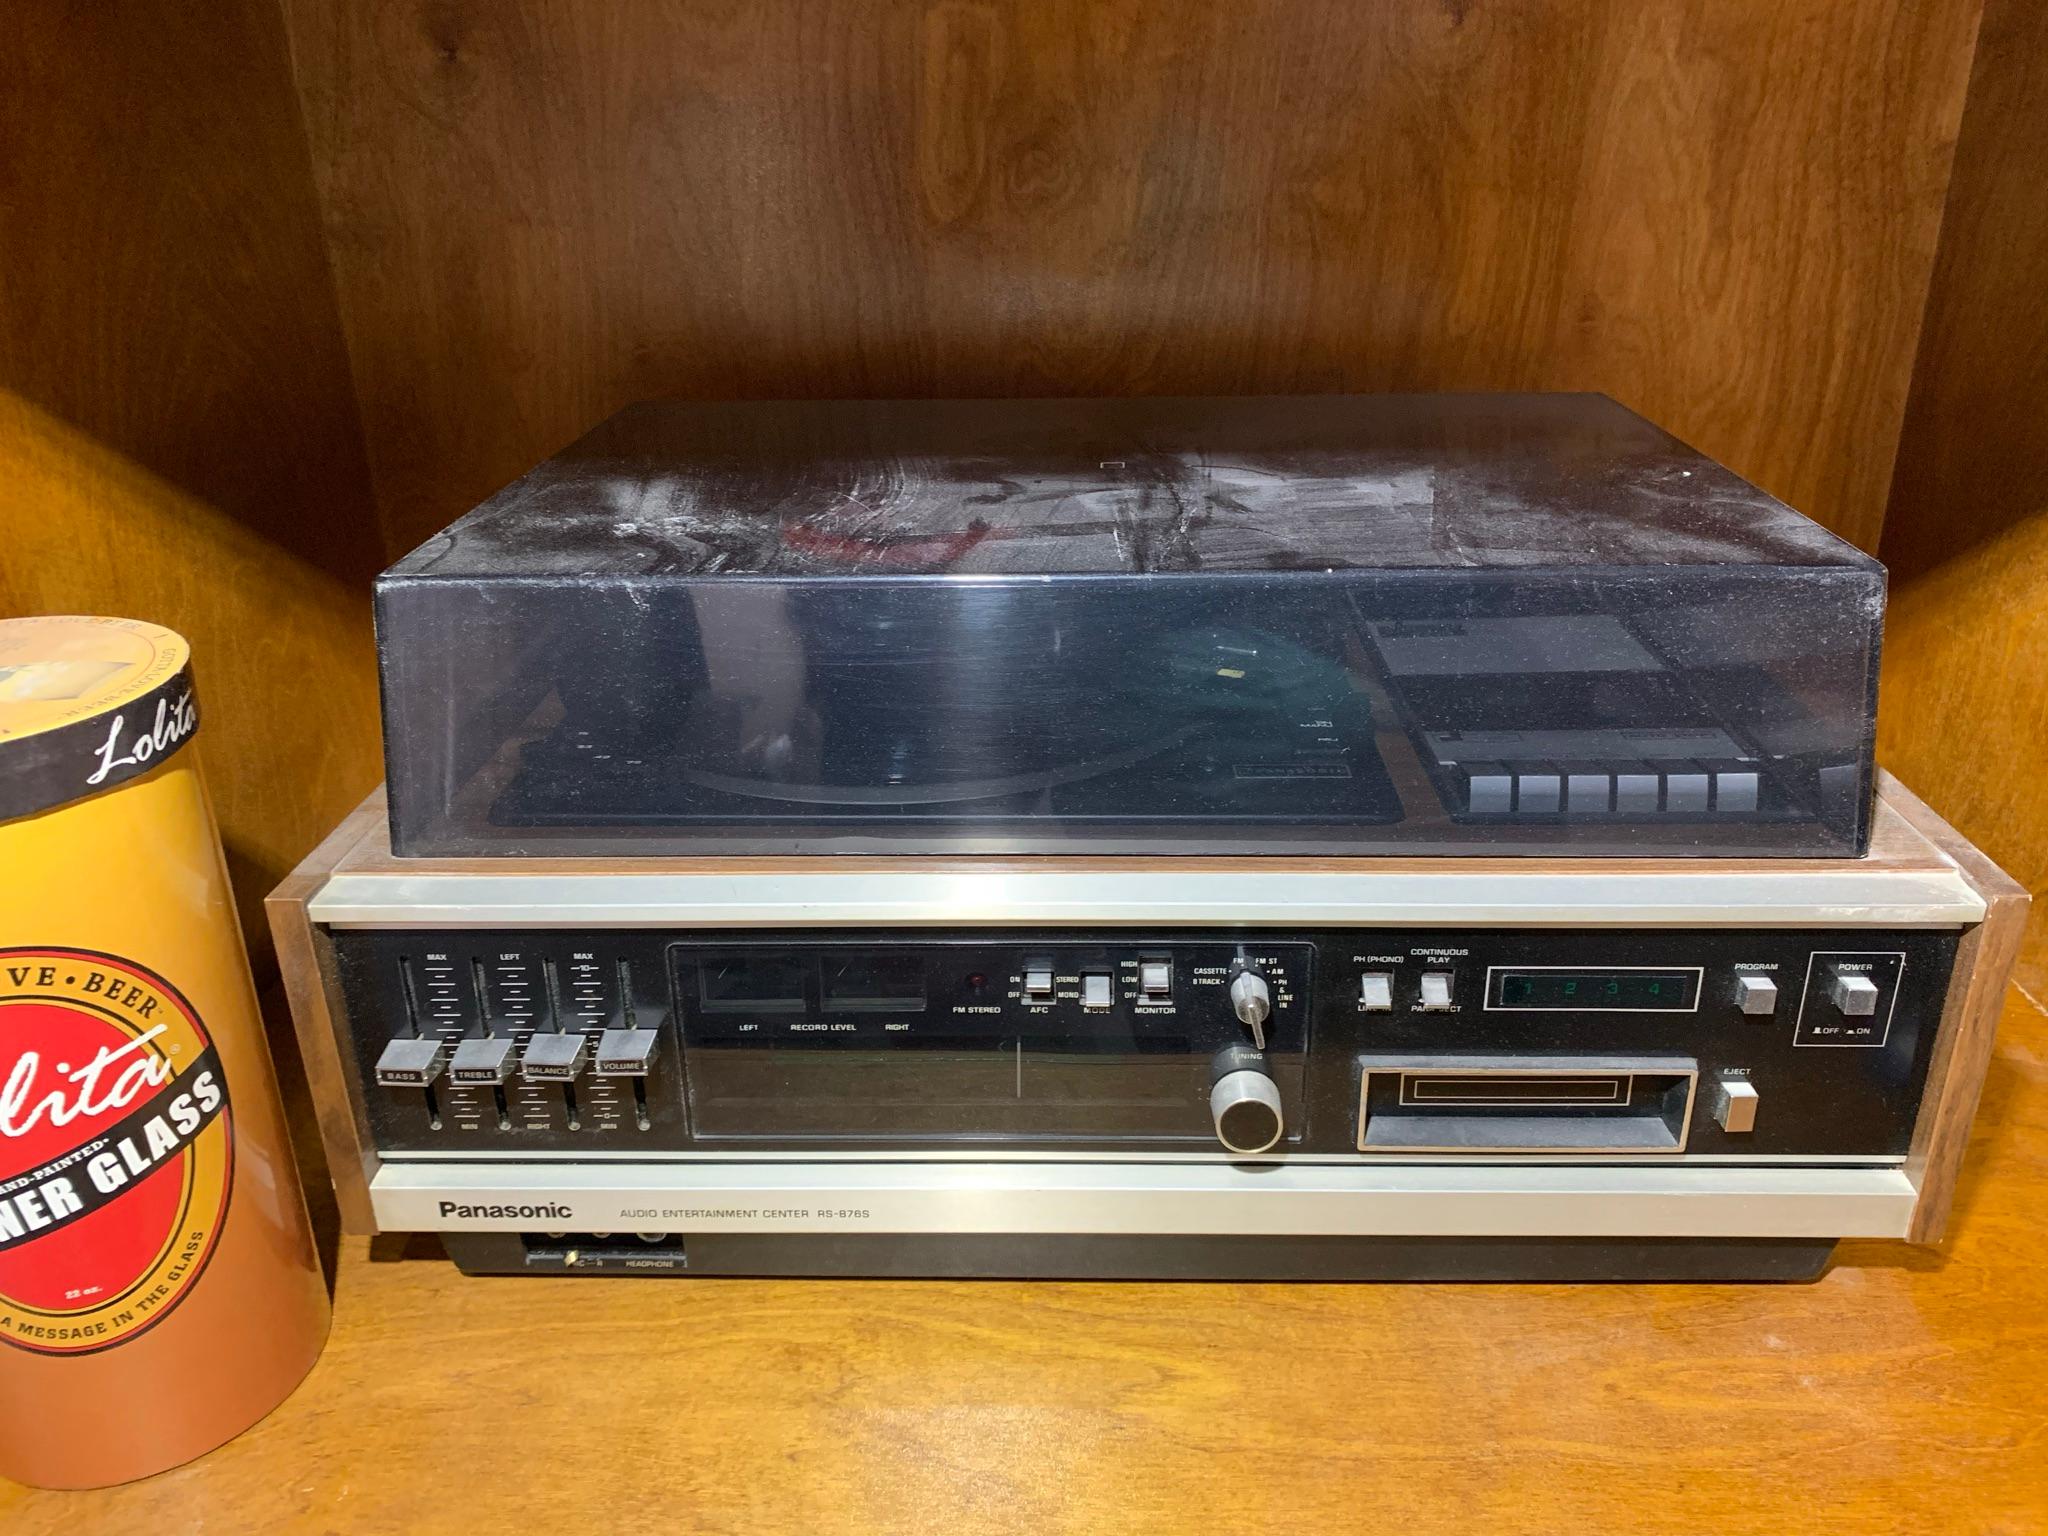 Vintage Records, Panasonic Audio Entertainment Center RS-876S, Books, Marble Chess Set, & More